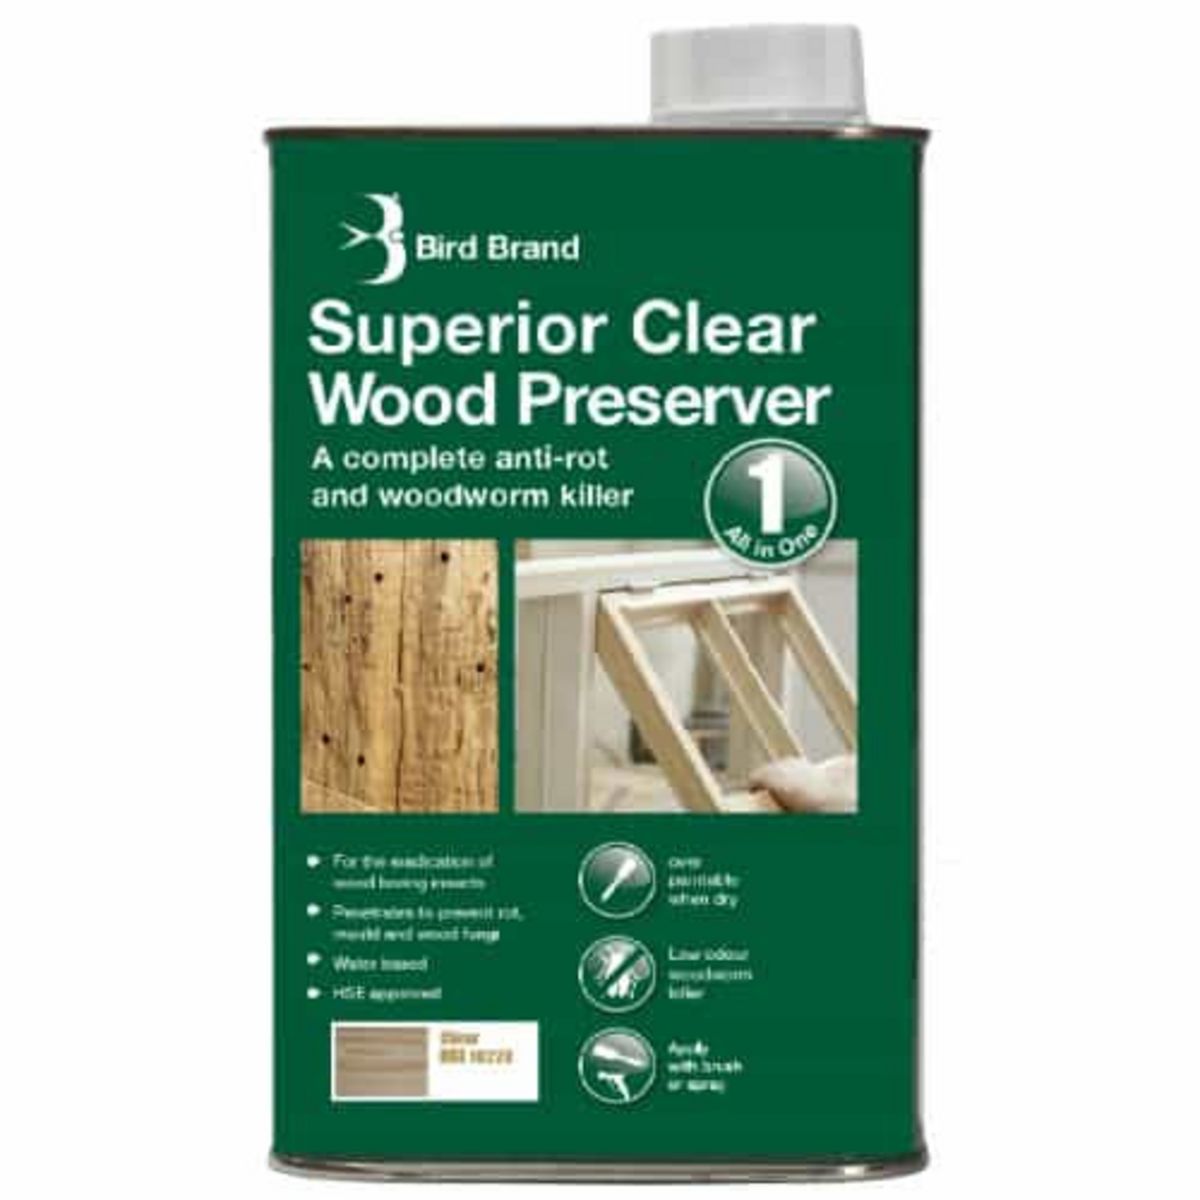 Superior Clear wood preserver.jpg